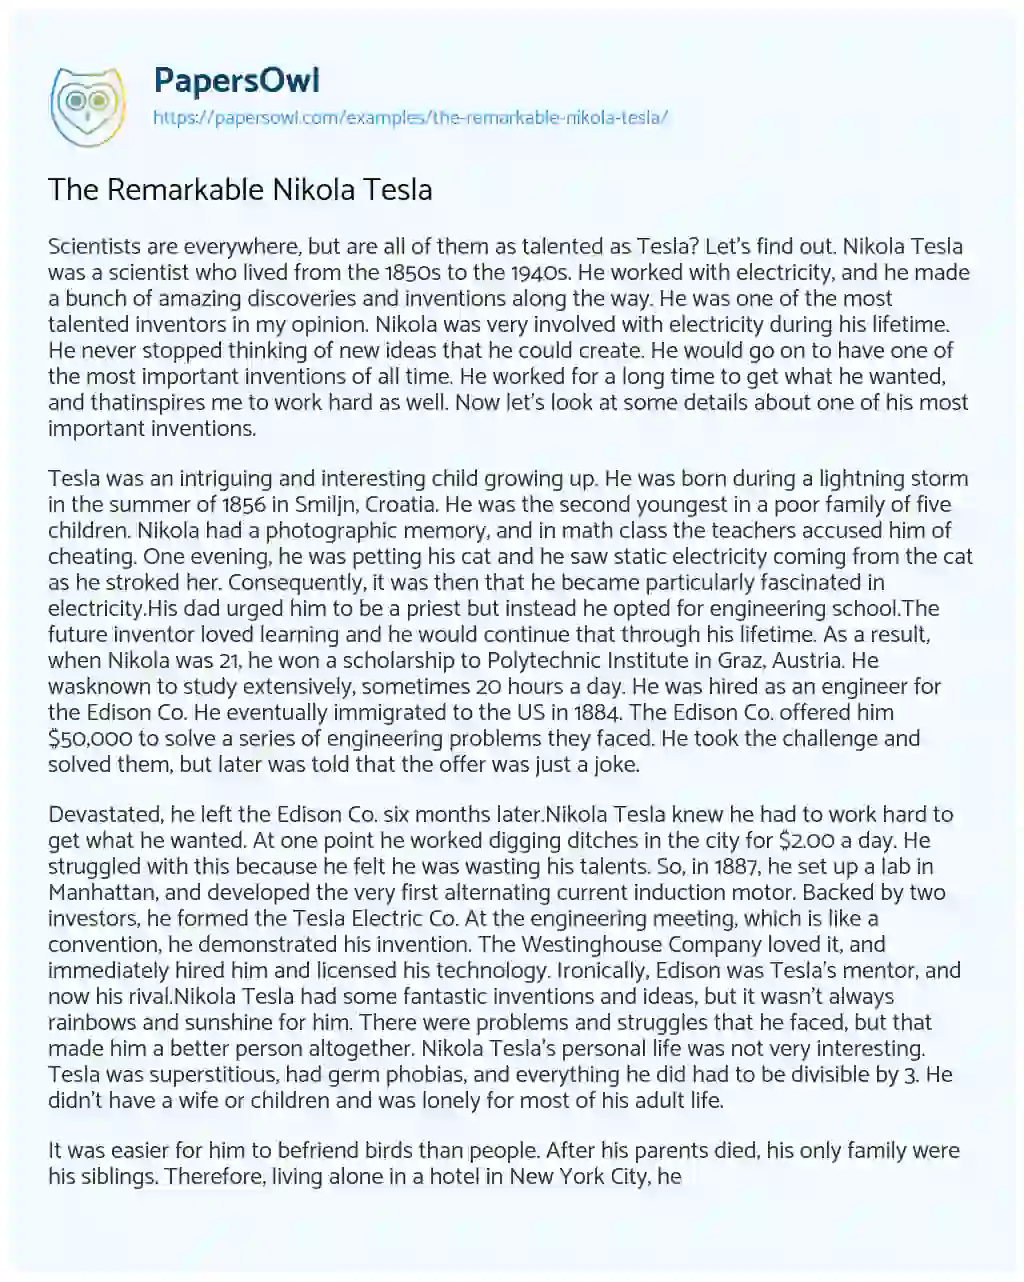 Essay on The Remarkable Nikola Tesla